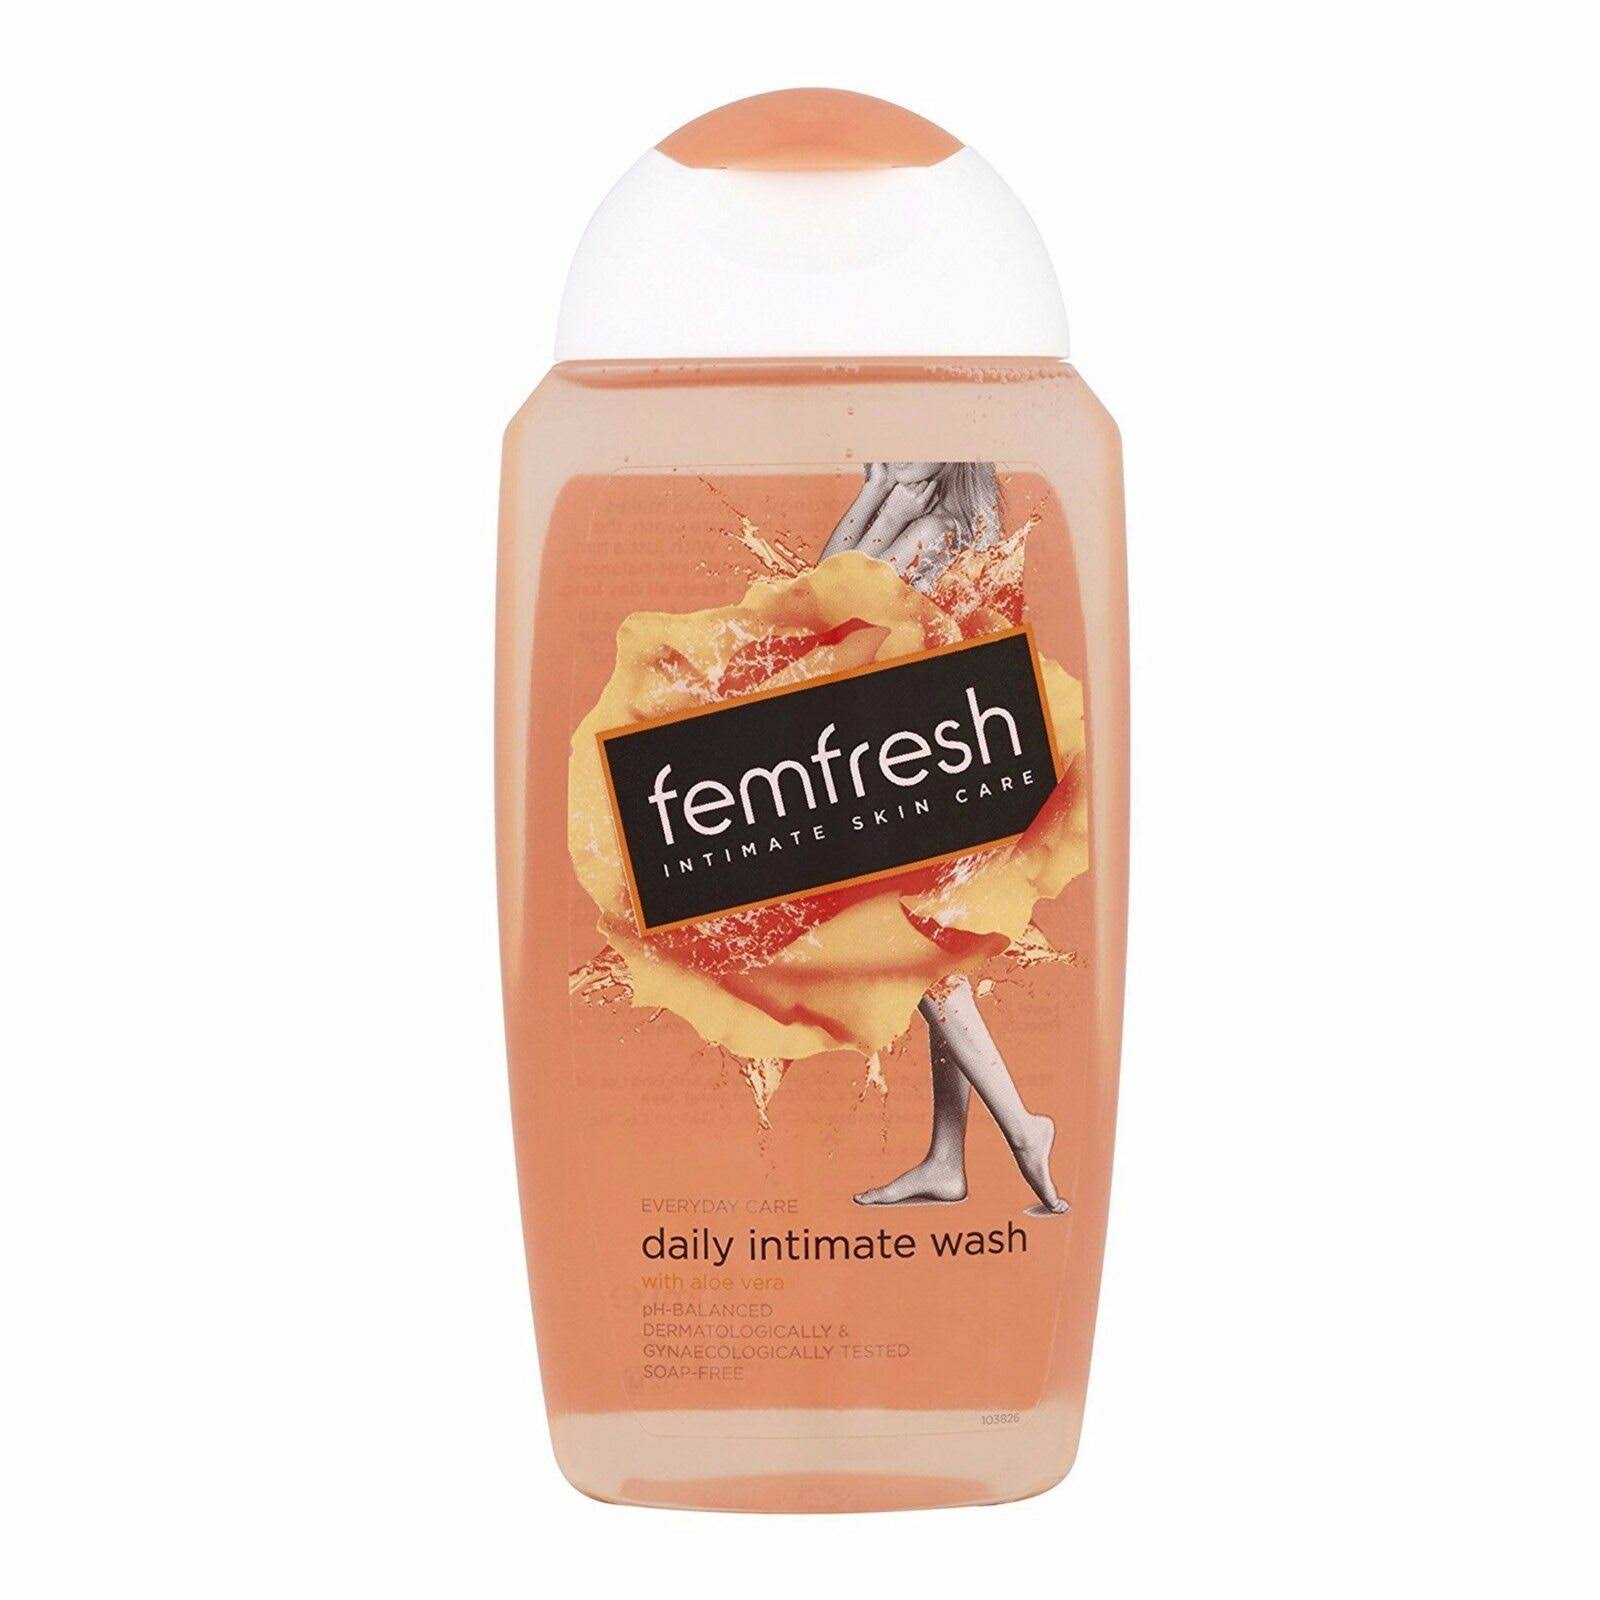 Femfresh Intimate Skin Care Daily Intimate Wash - with Aloe Vera, 250ml